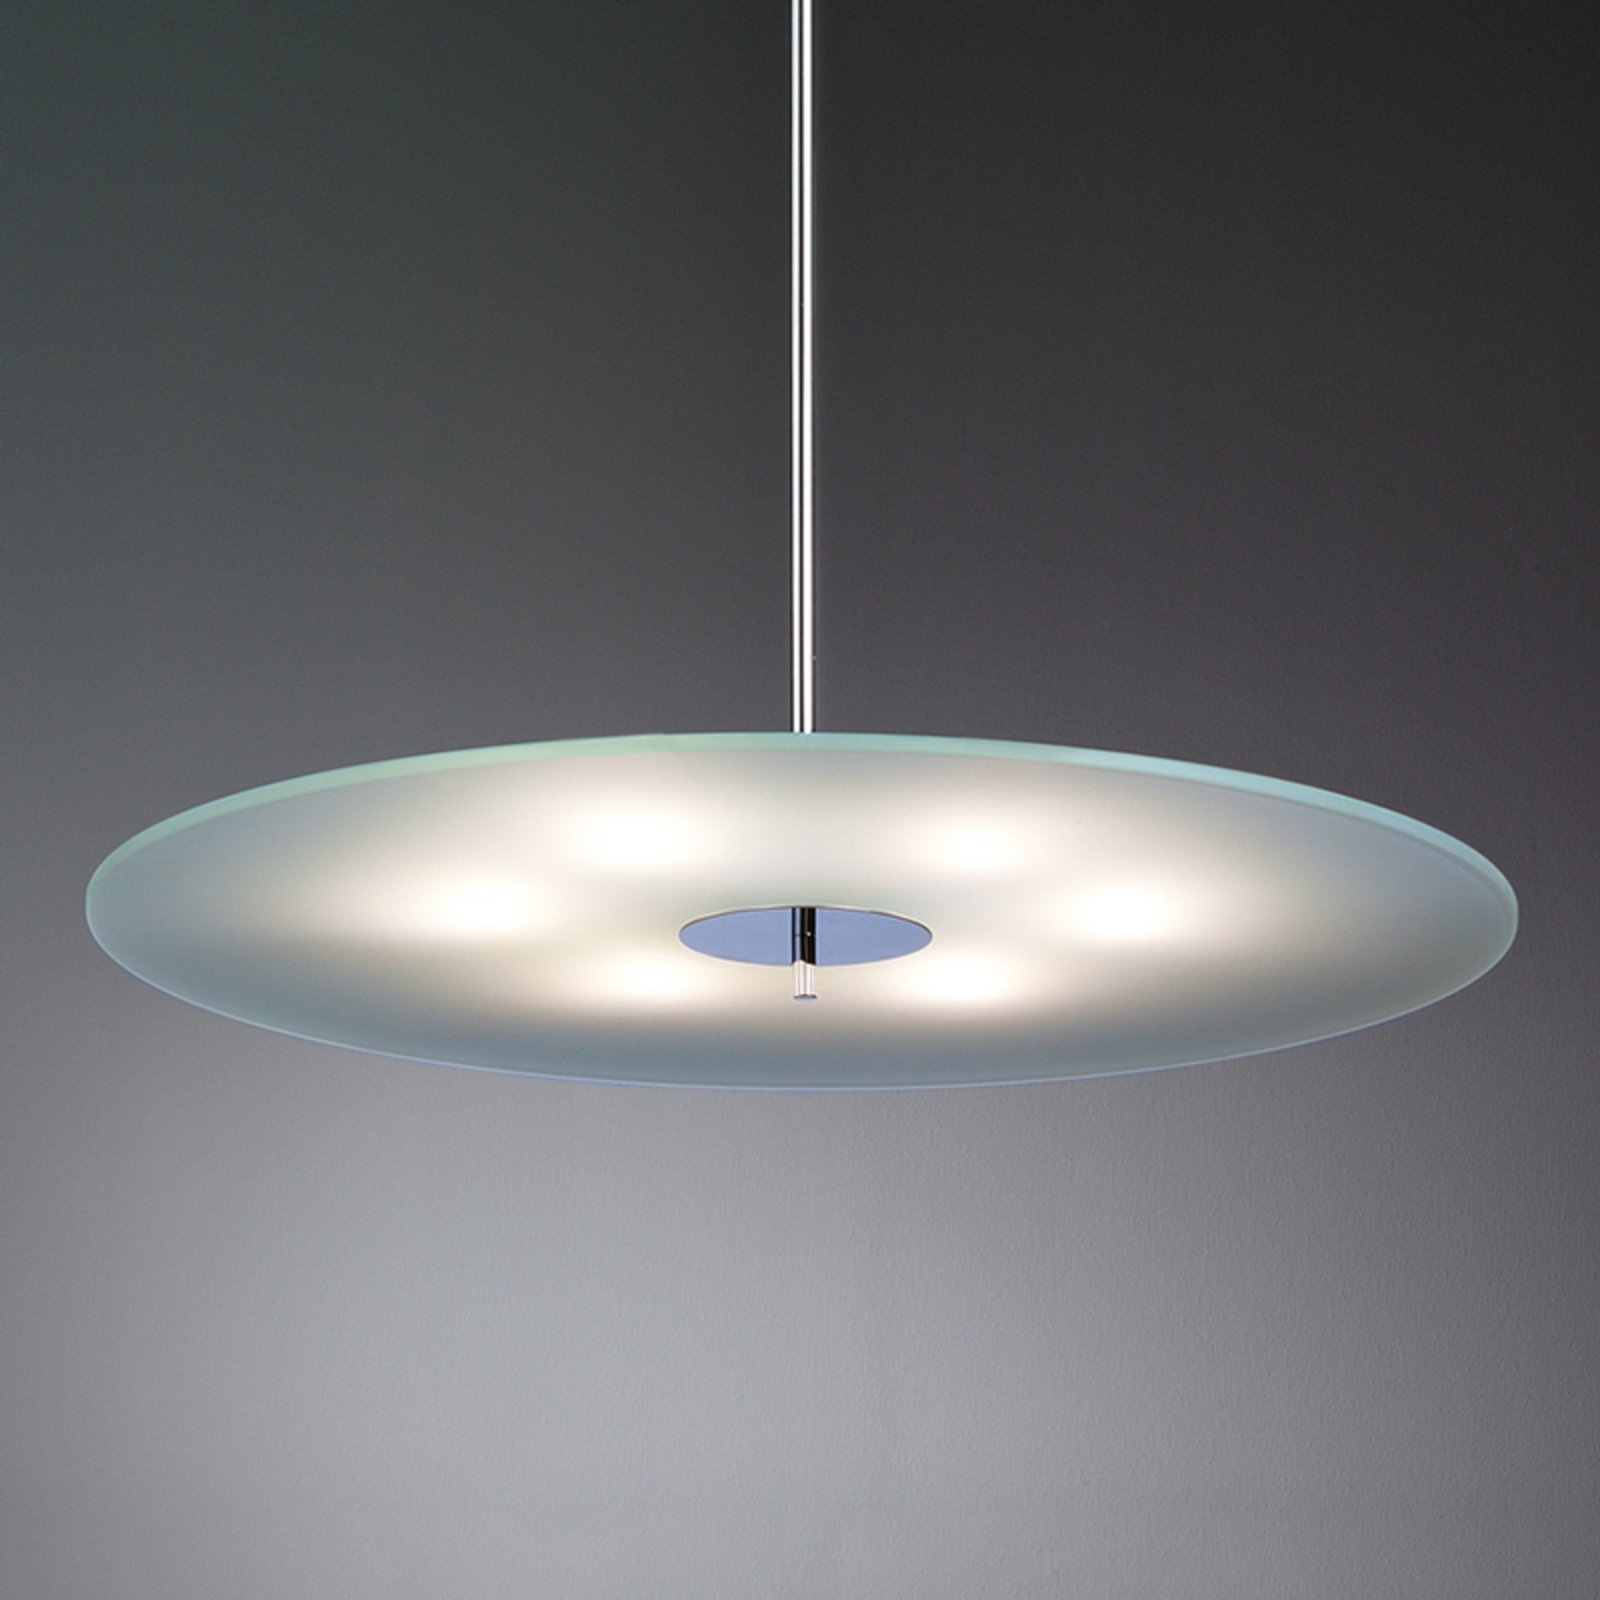 Glass pendant light 70 cm by Hans Przyrembel